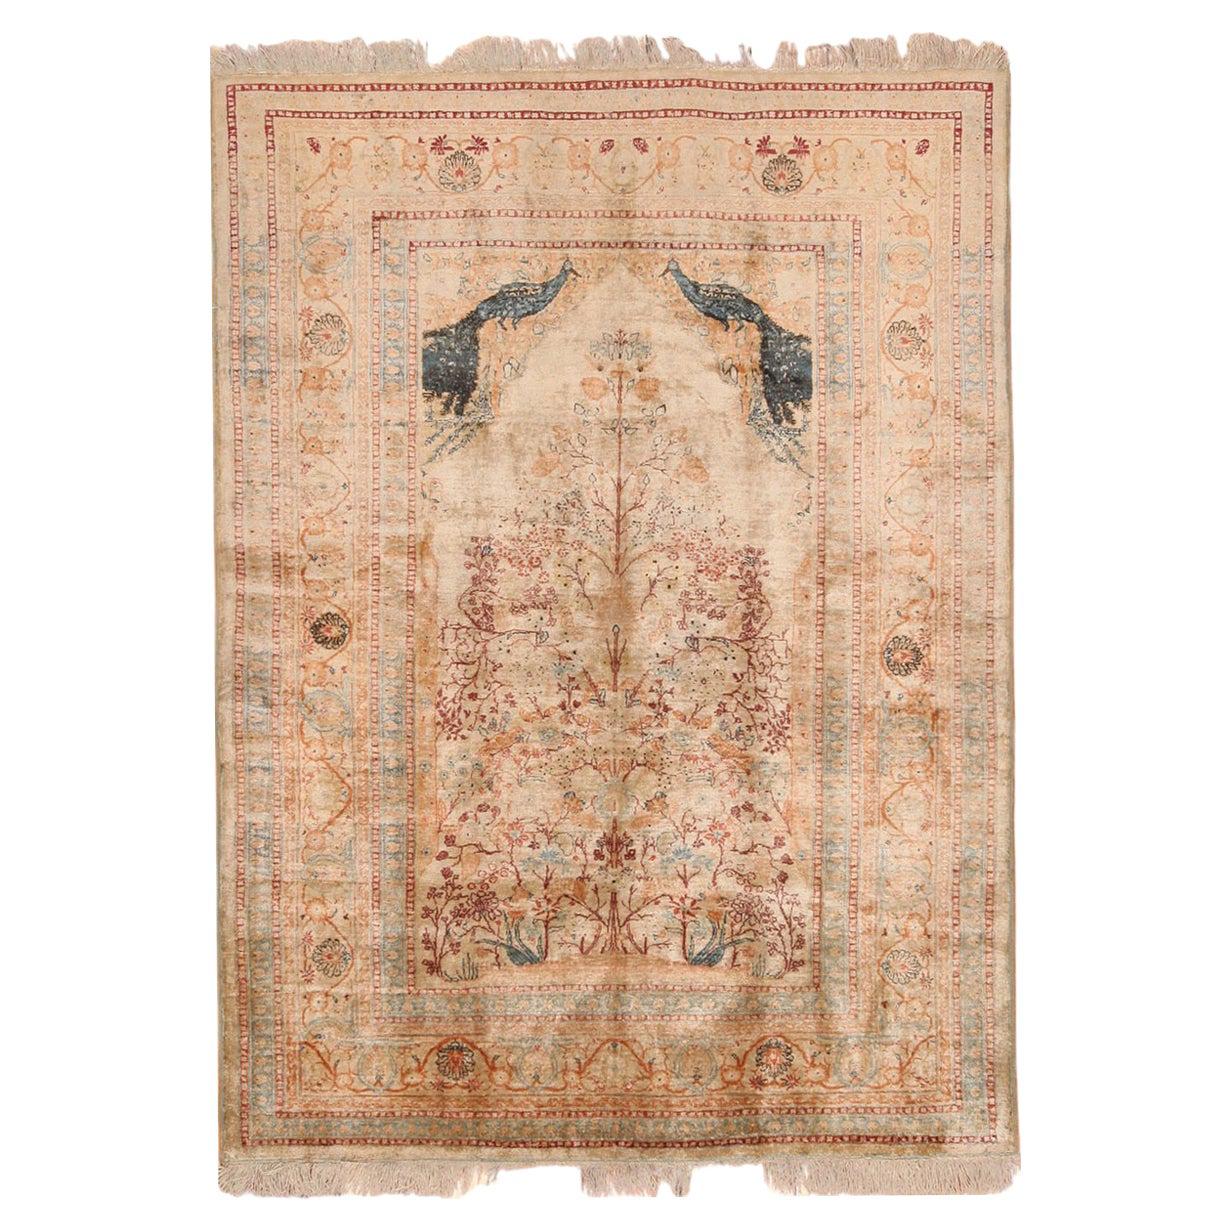 Antique Persian Tabriz Silk Prayer Rug.4 ft 3 in x 5 ft 6 in